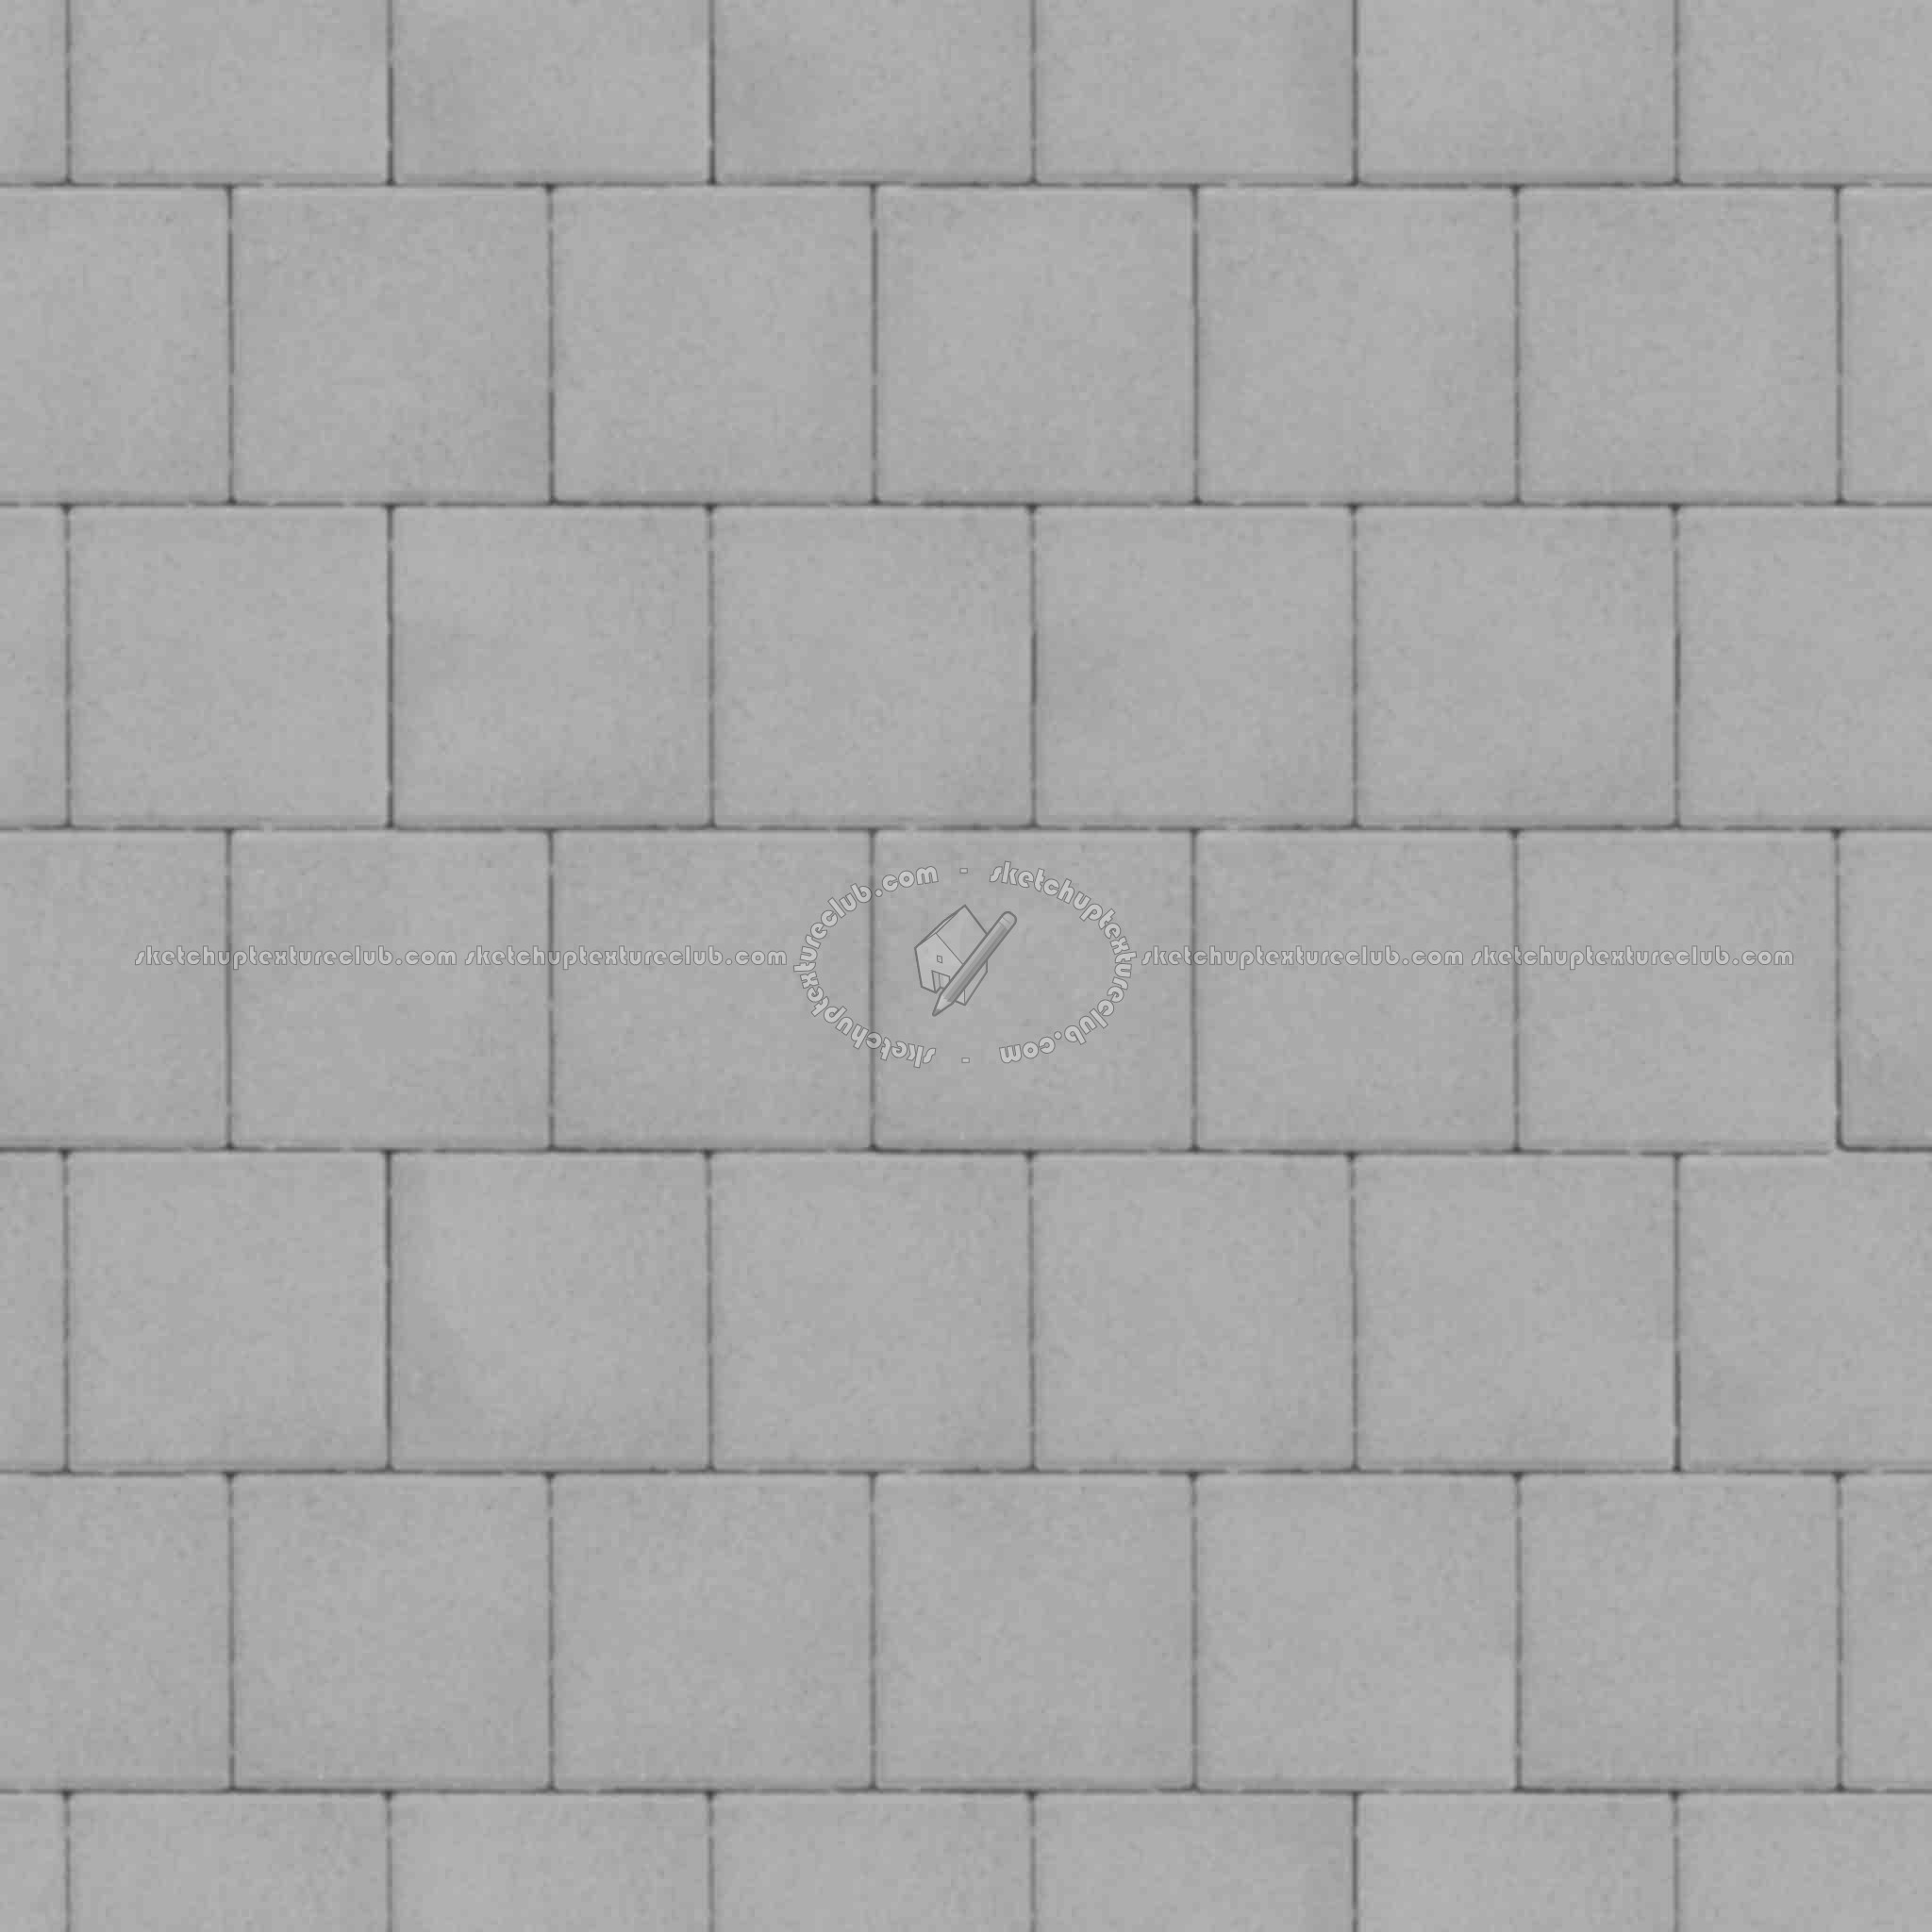 Concrete tile paving PBR texture seamless 21987